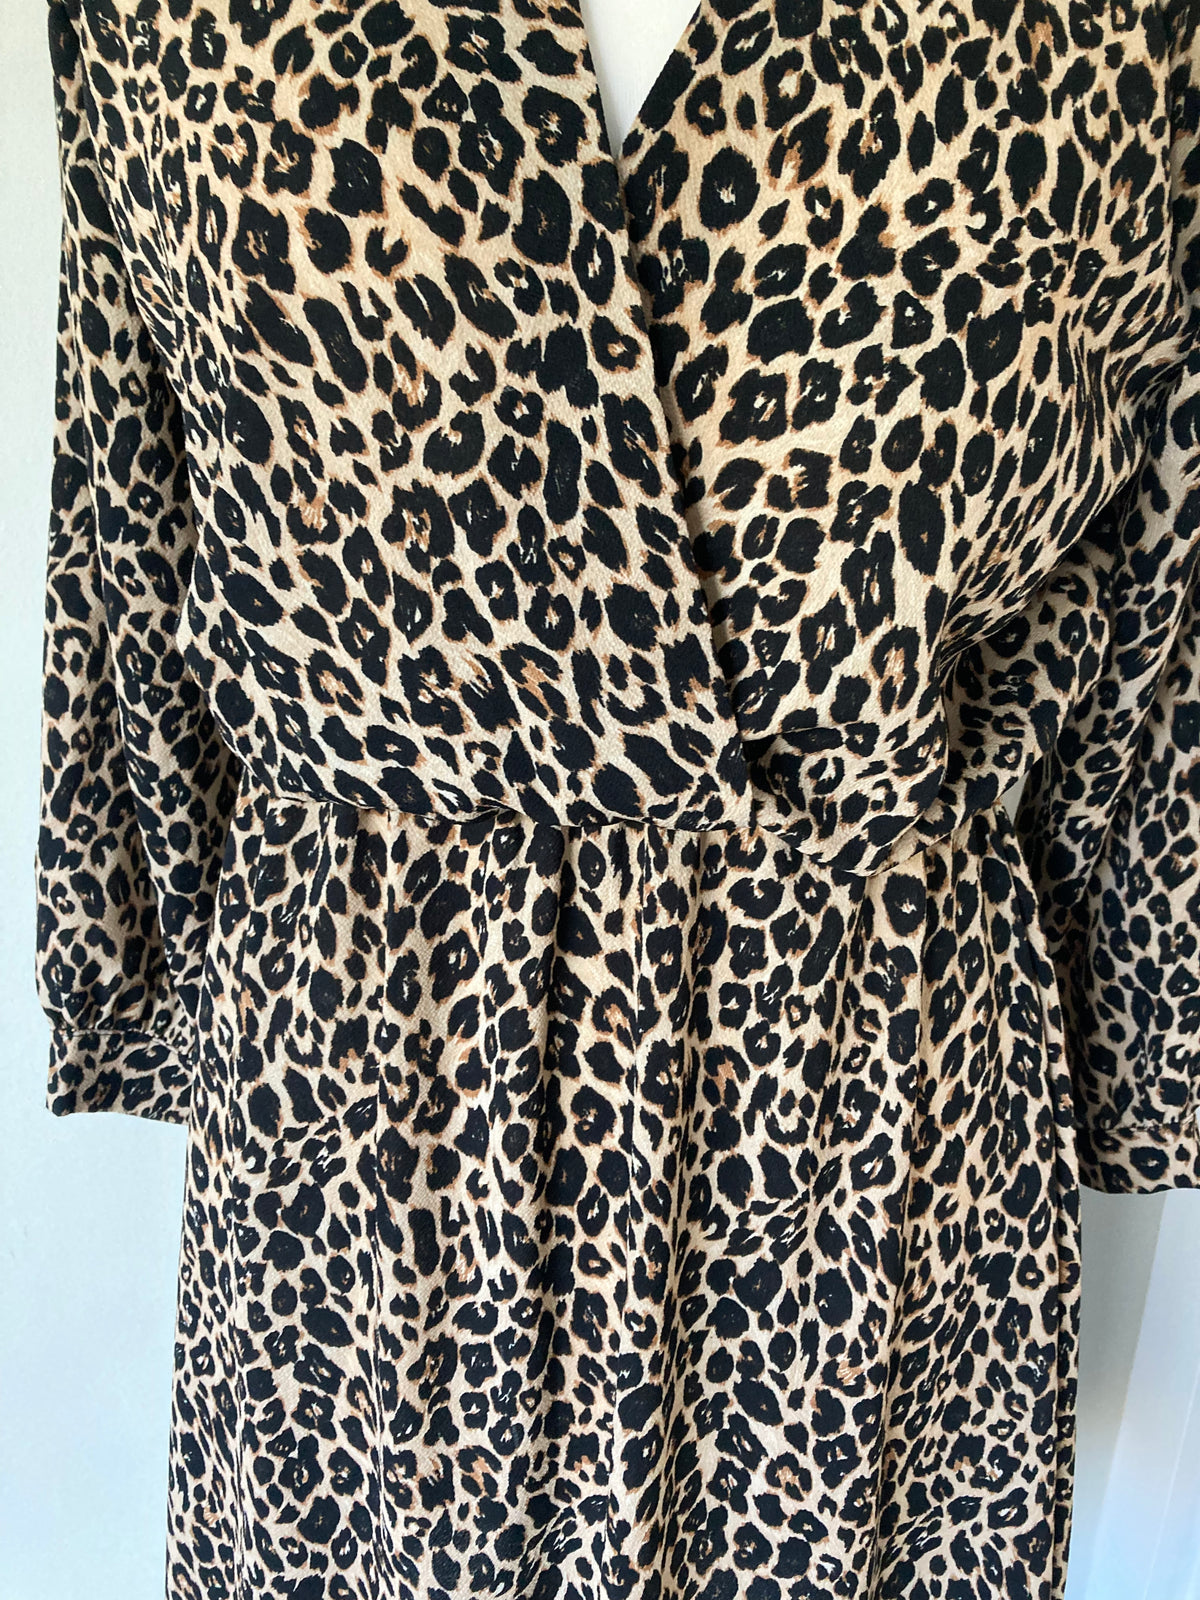 Leopard print wrap dress by Boohoo size 12